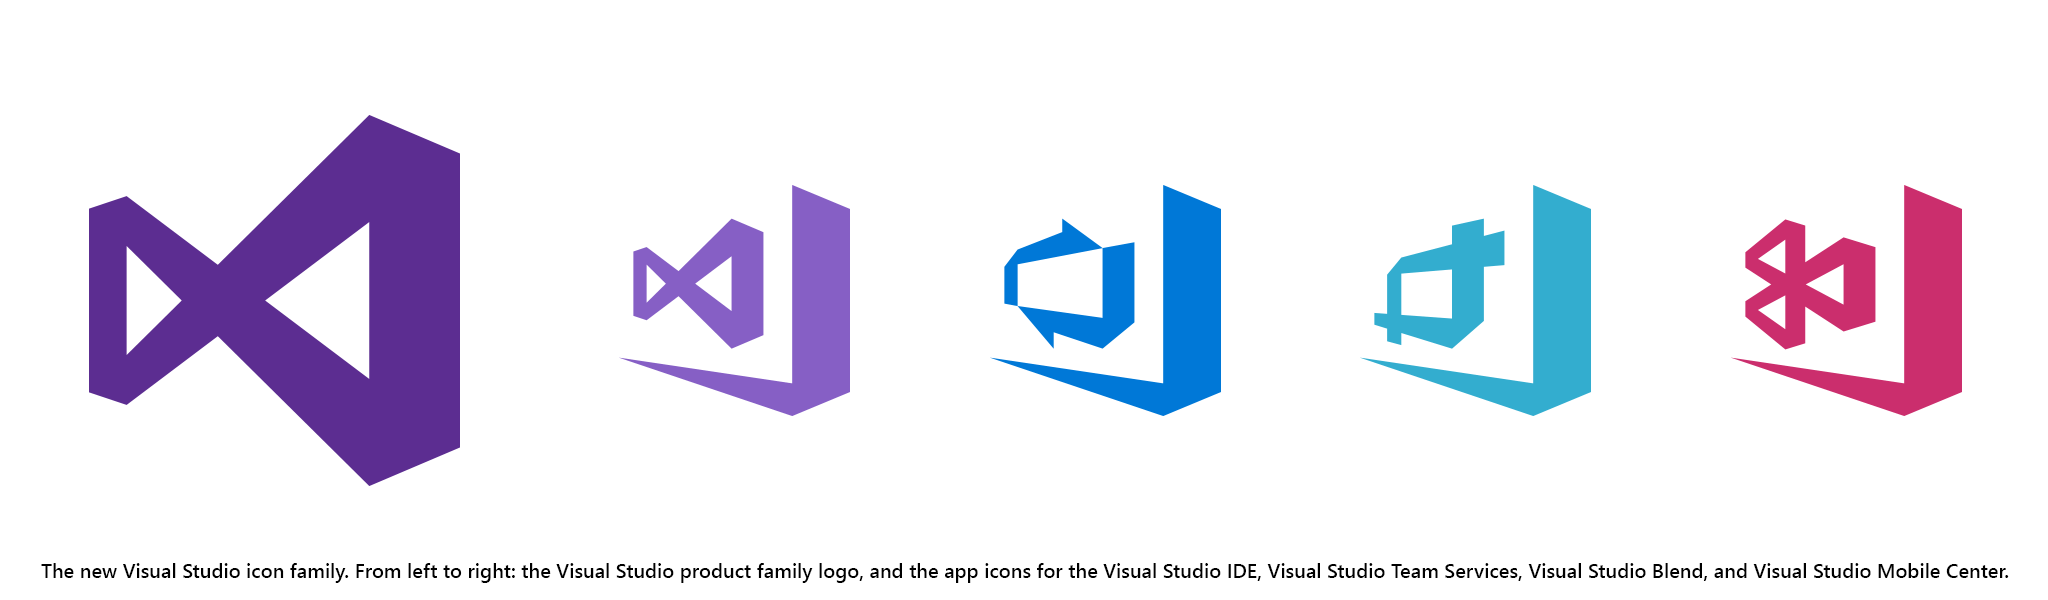 Visual Studio 2010 Logo - Iterations on infinity | The Visual Studio Blog